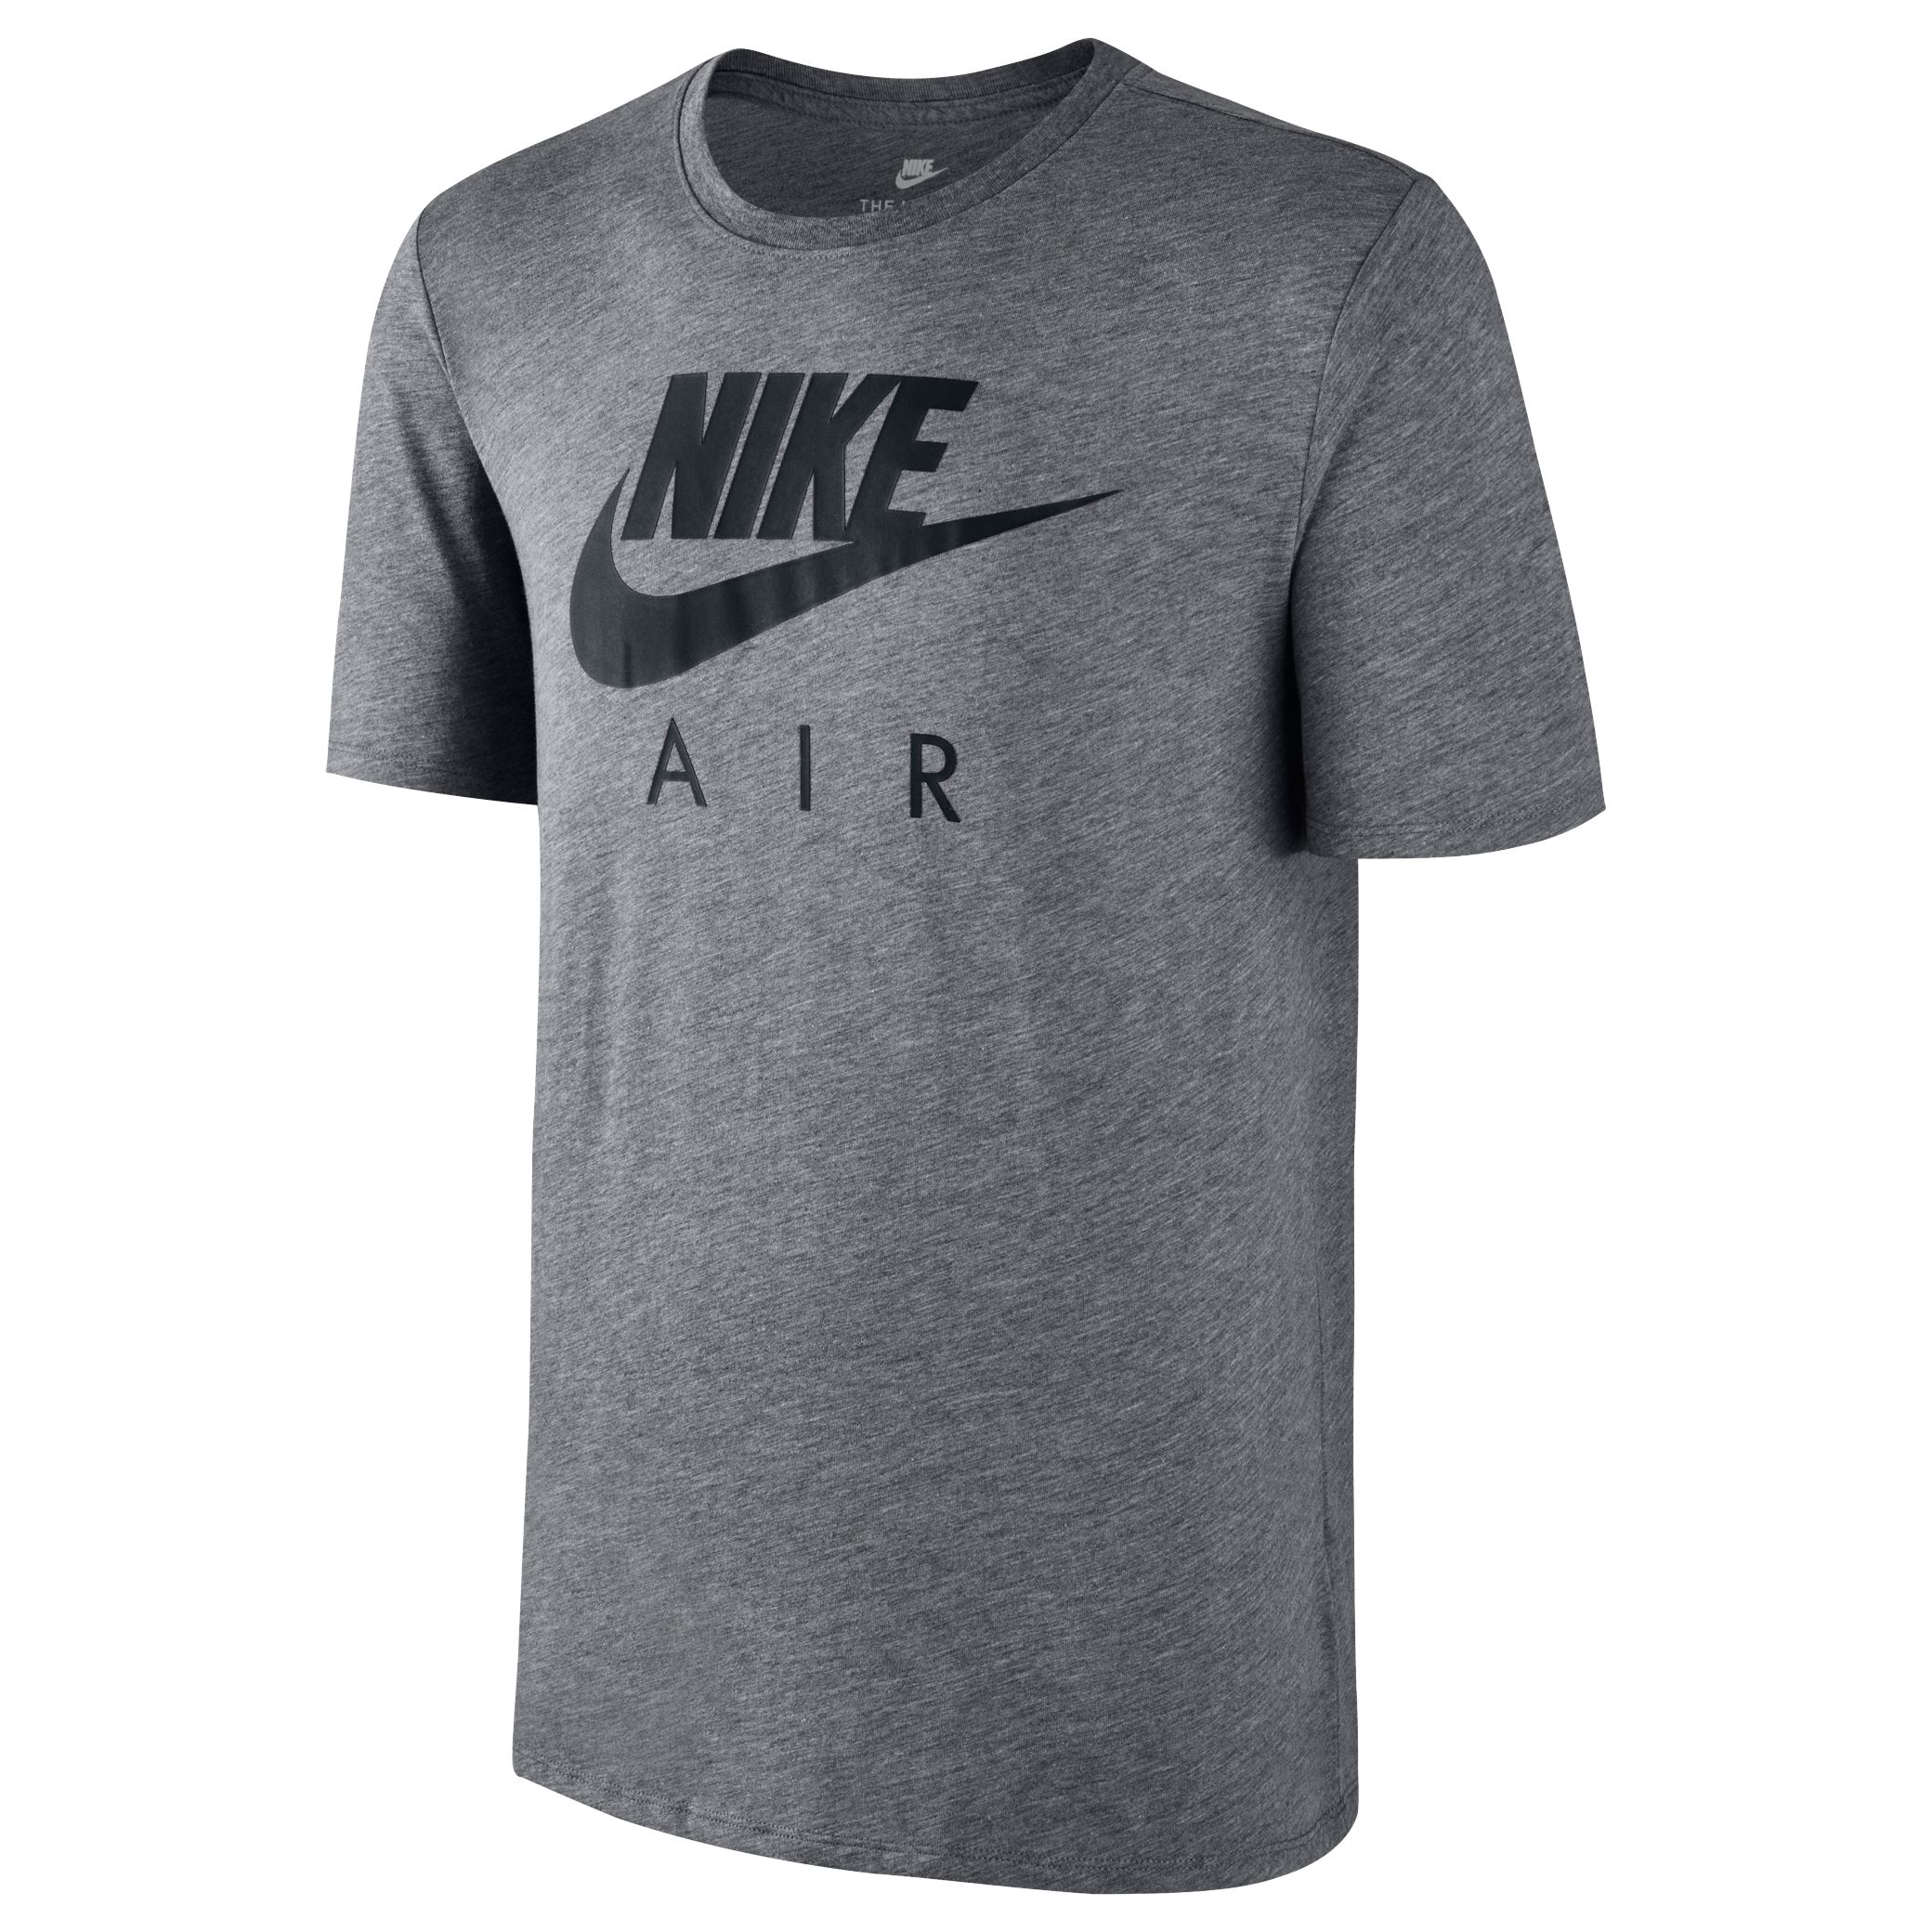 Nike Sportswear Air T-Shirt, Carbon Heather/Black, S